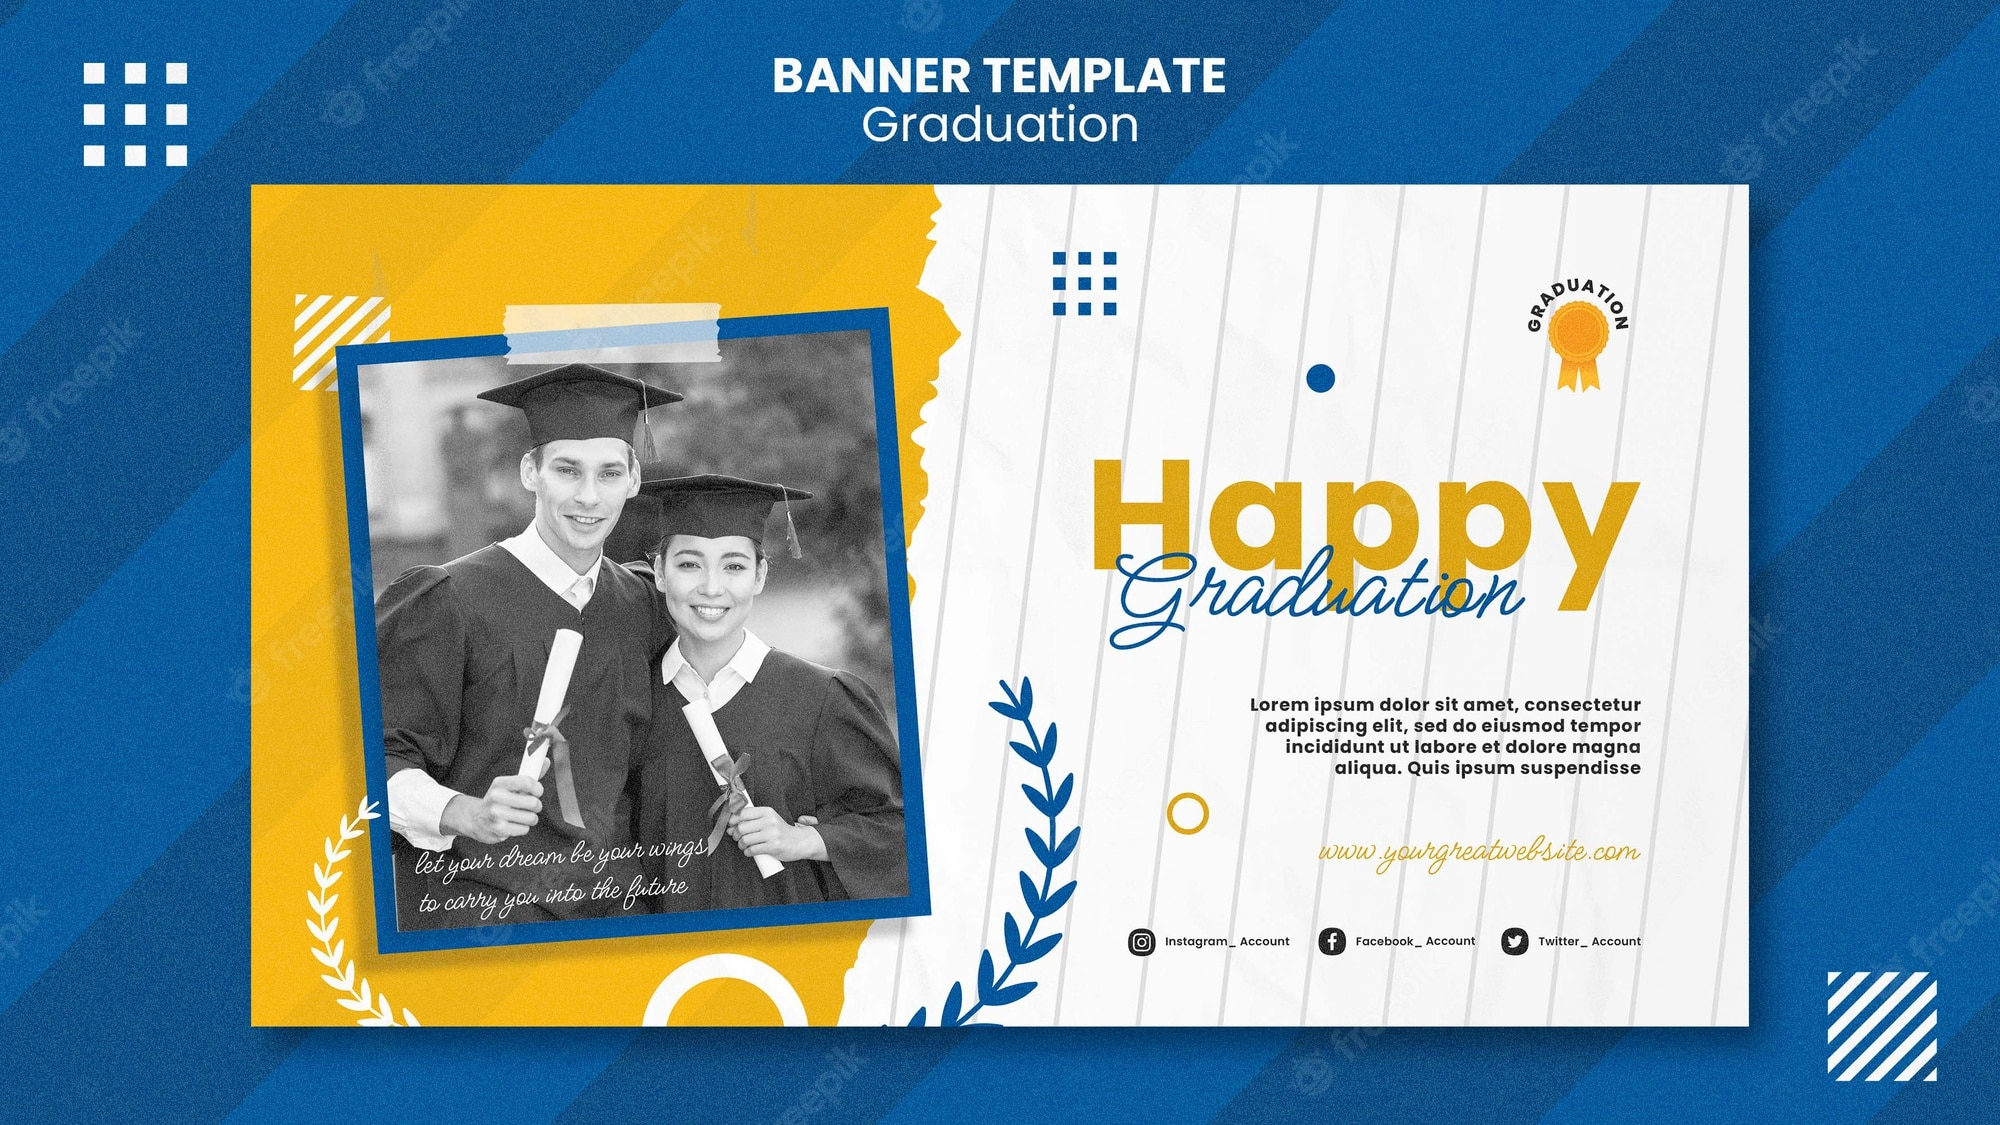 Graduation Banner Images  Free Vectors, Stock Photos & PSD For Graduation Banner Template